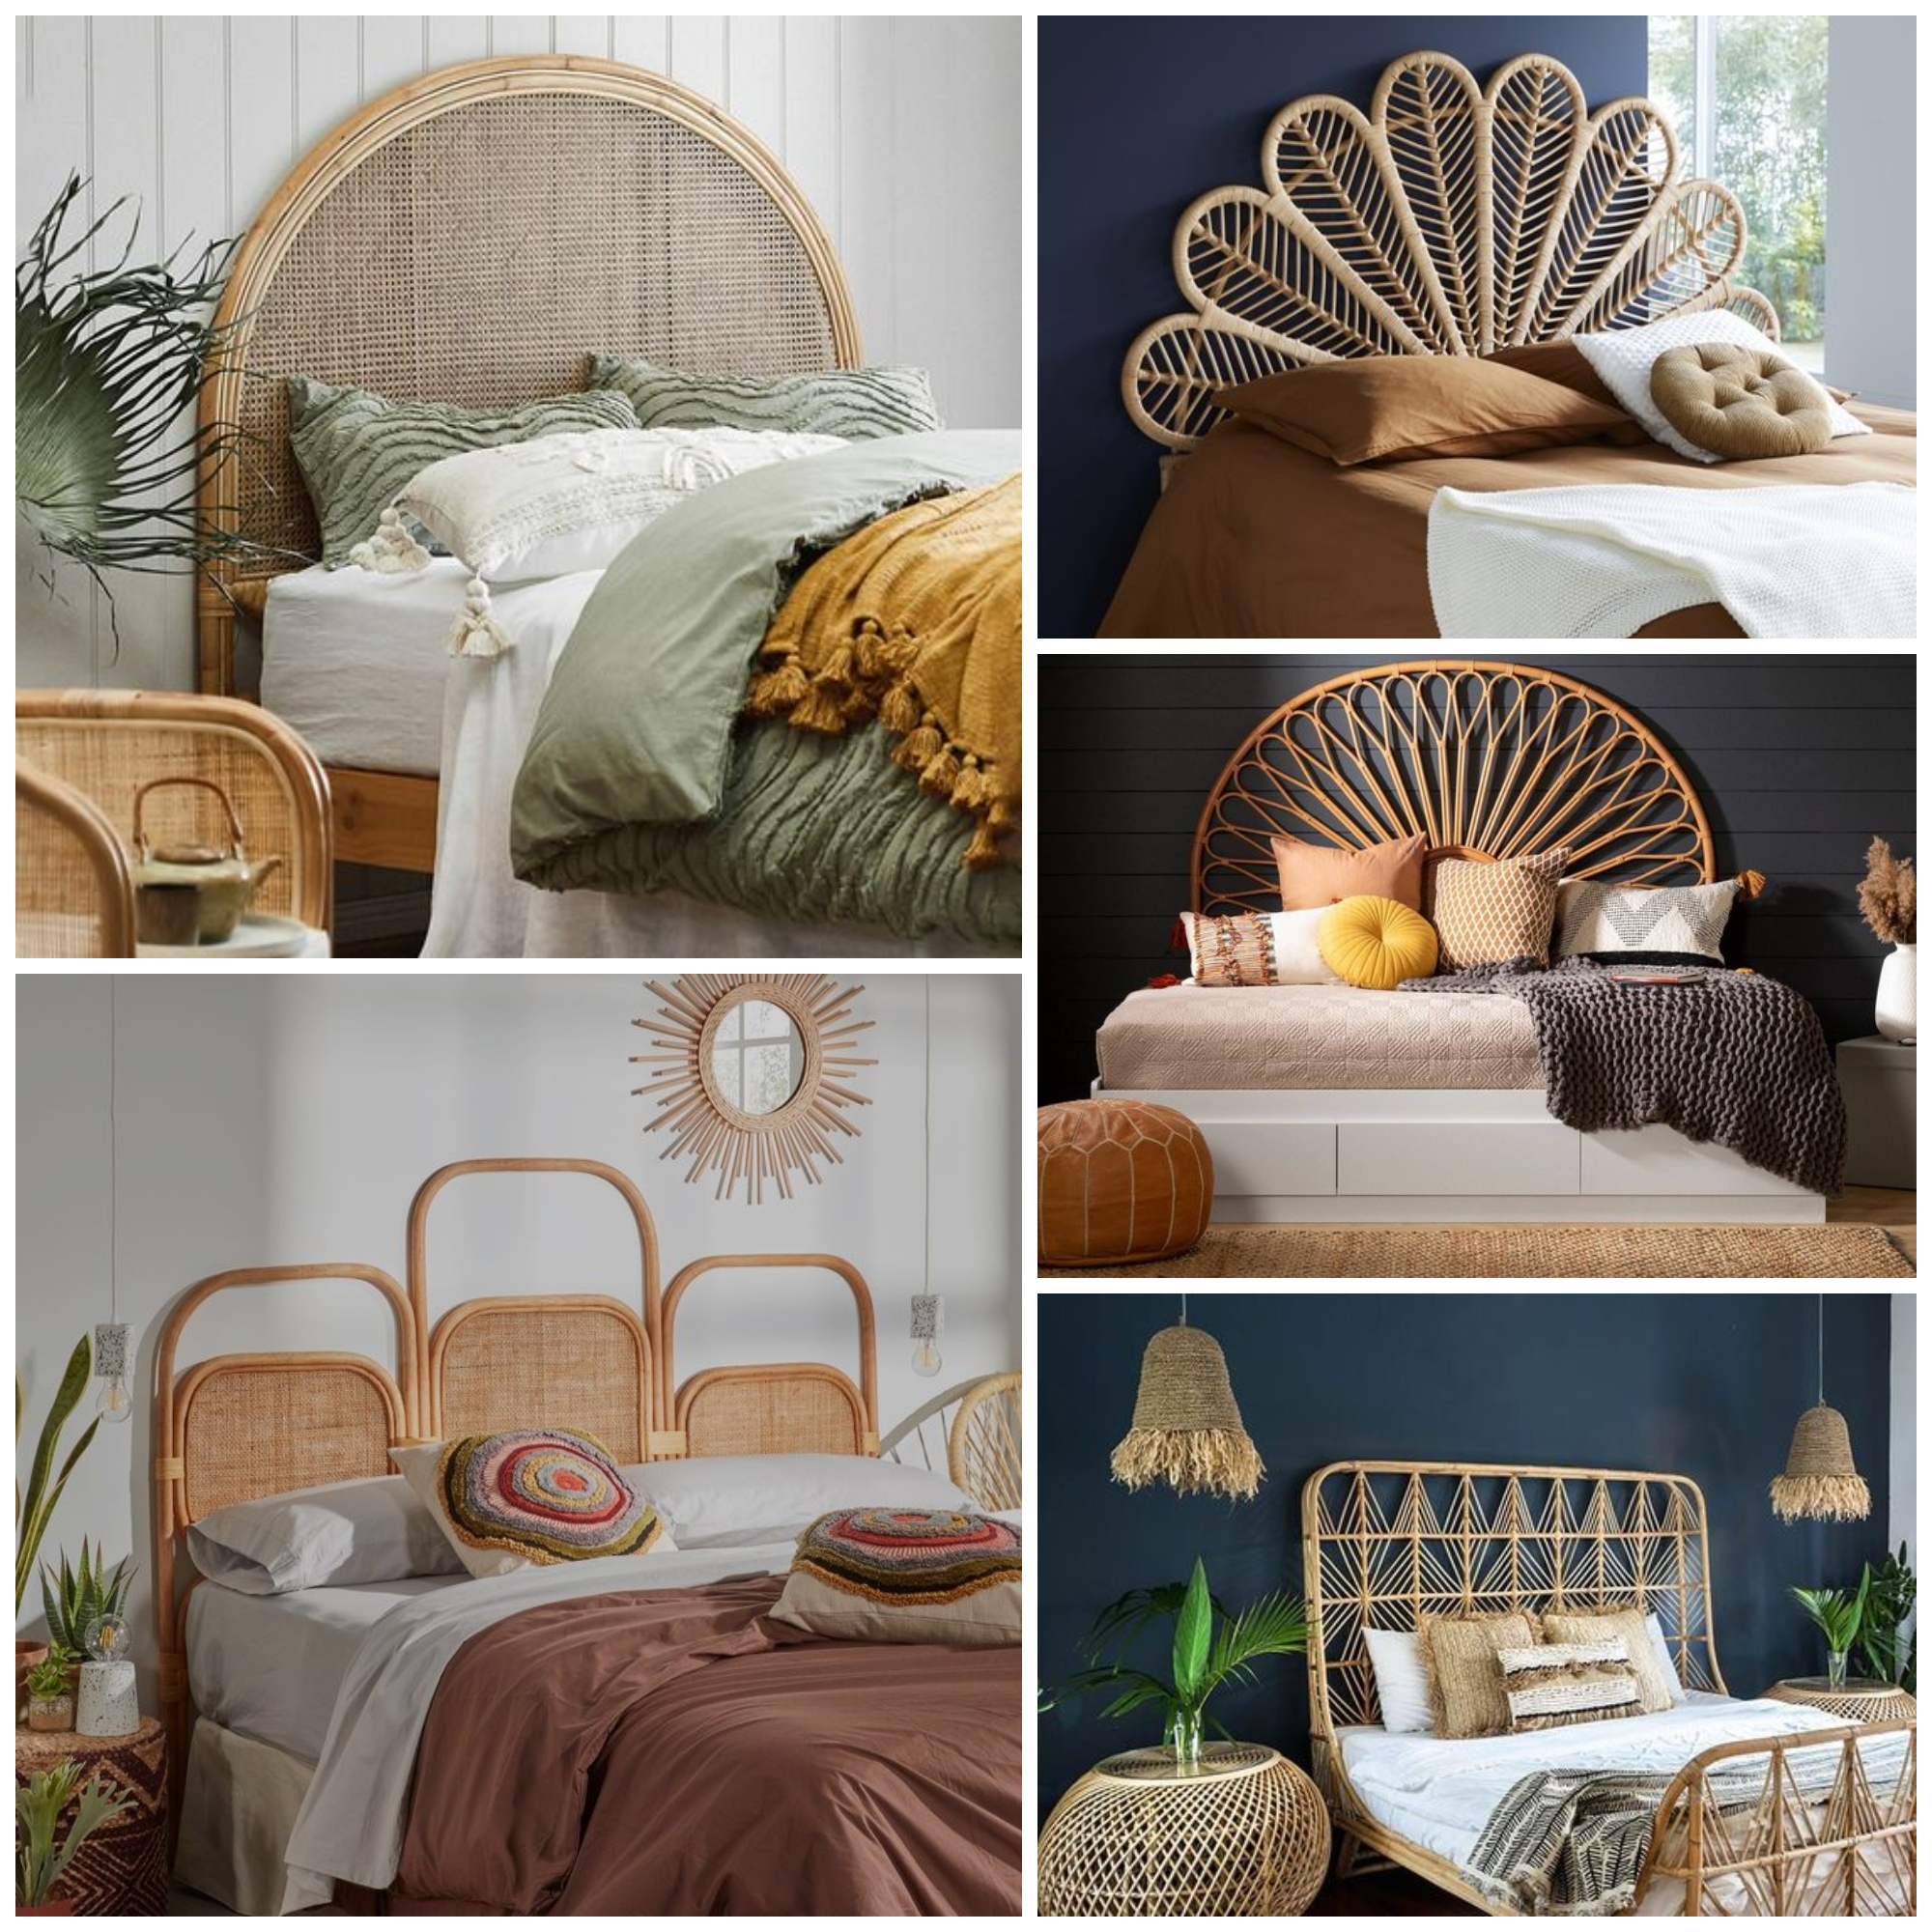 Modern rattan bedroom ideas: Inspiration for redecorating